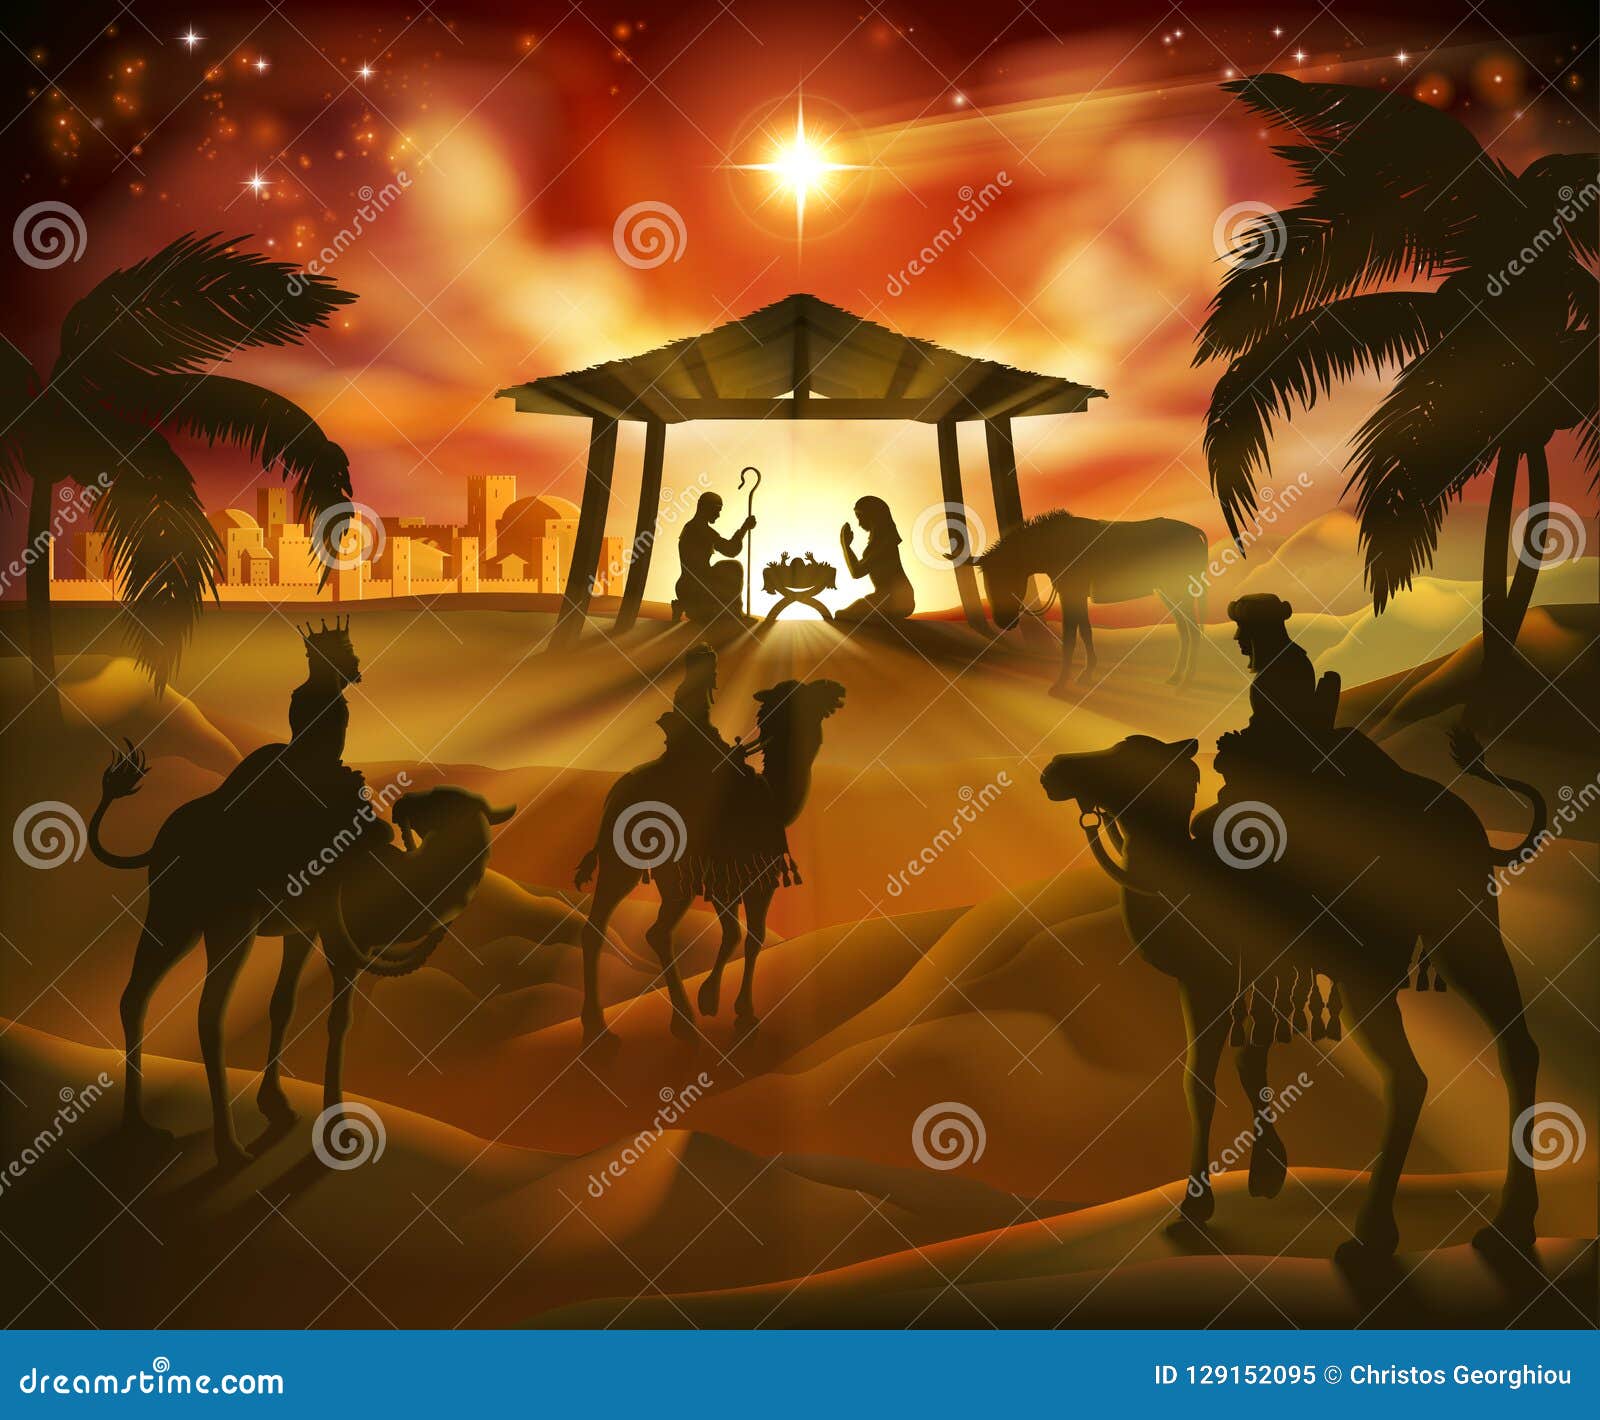 nativity christmas scene